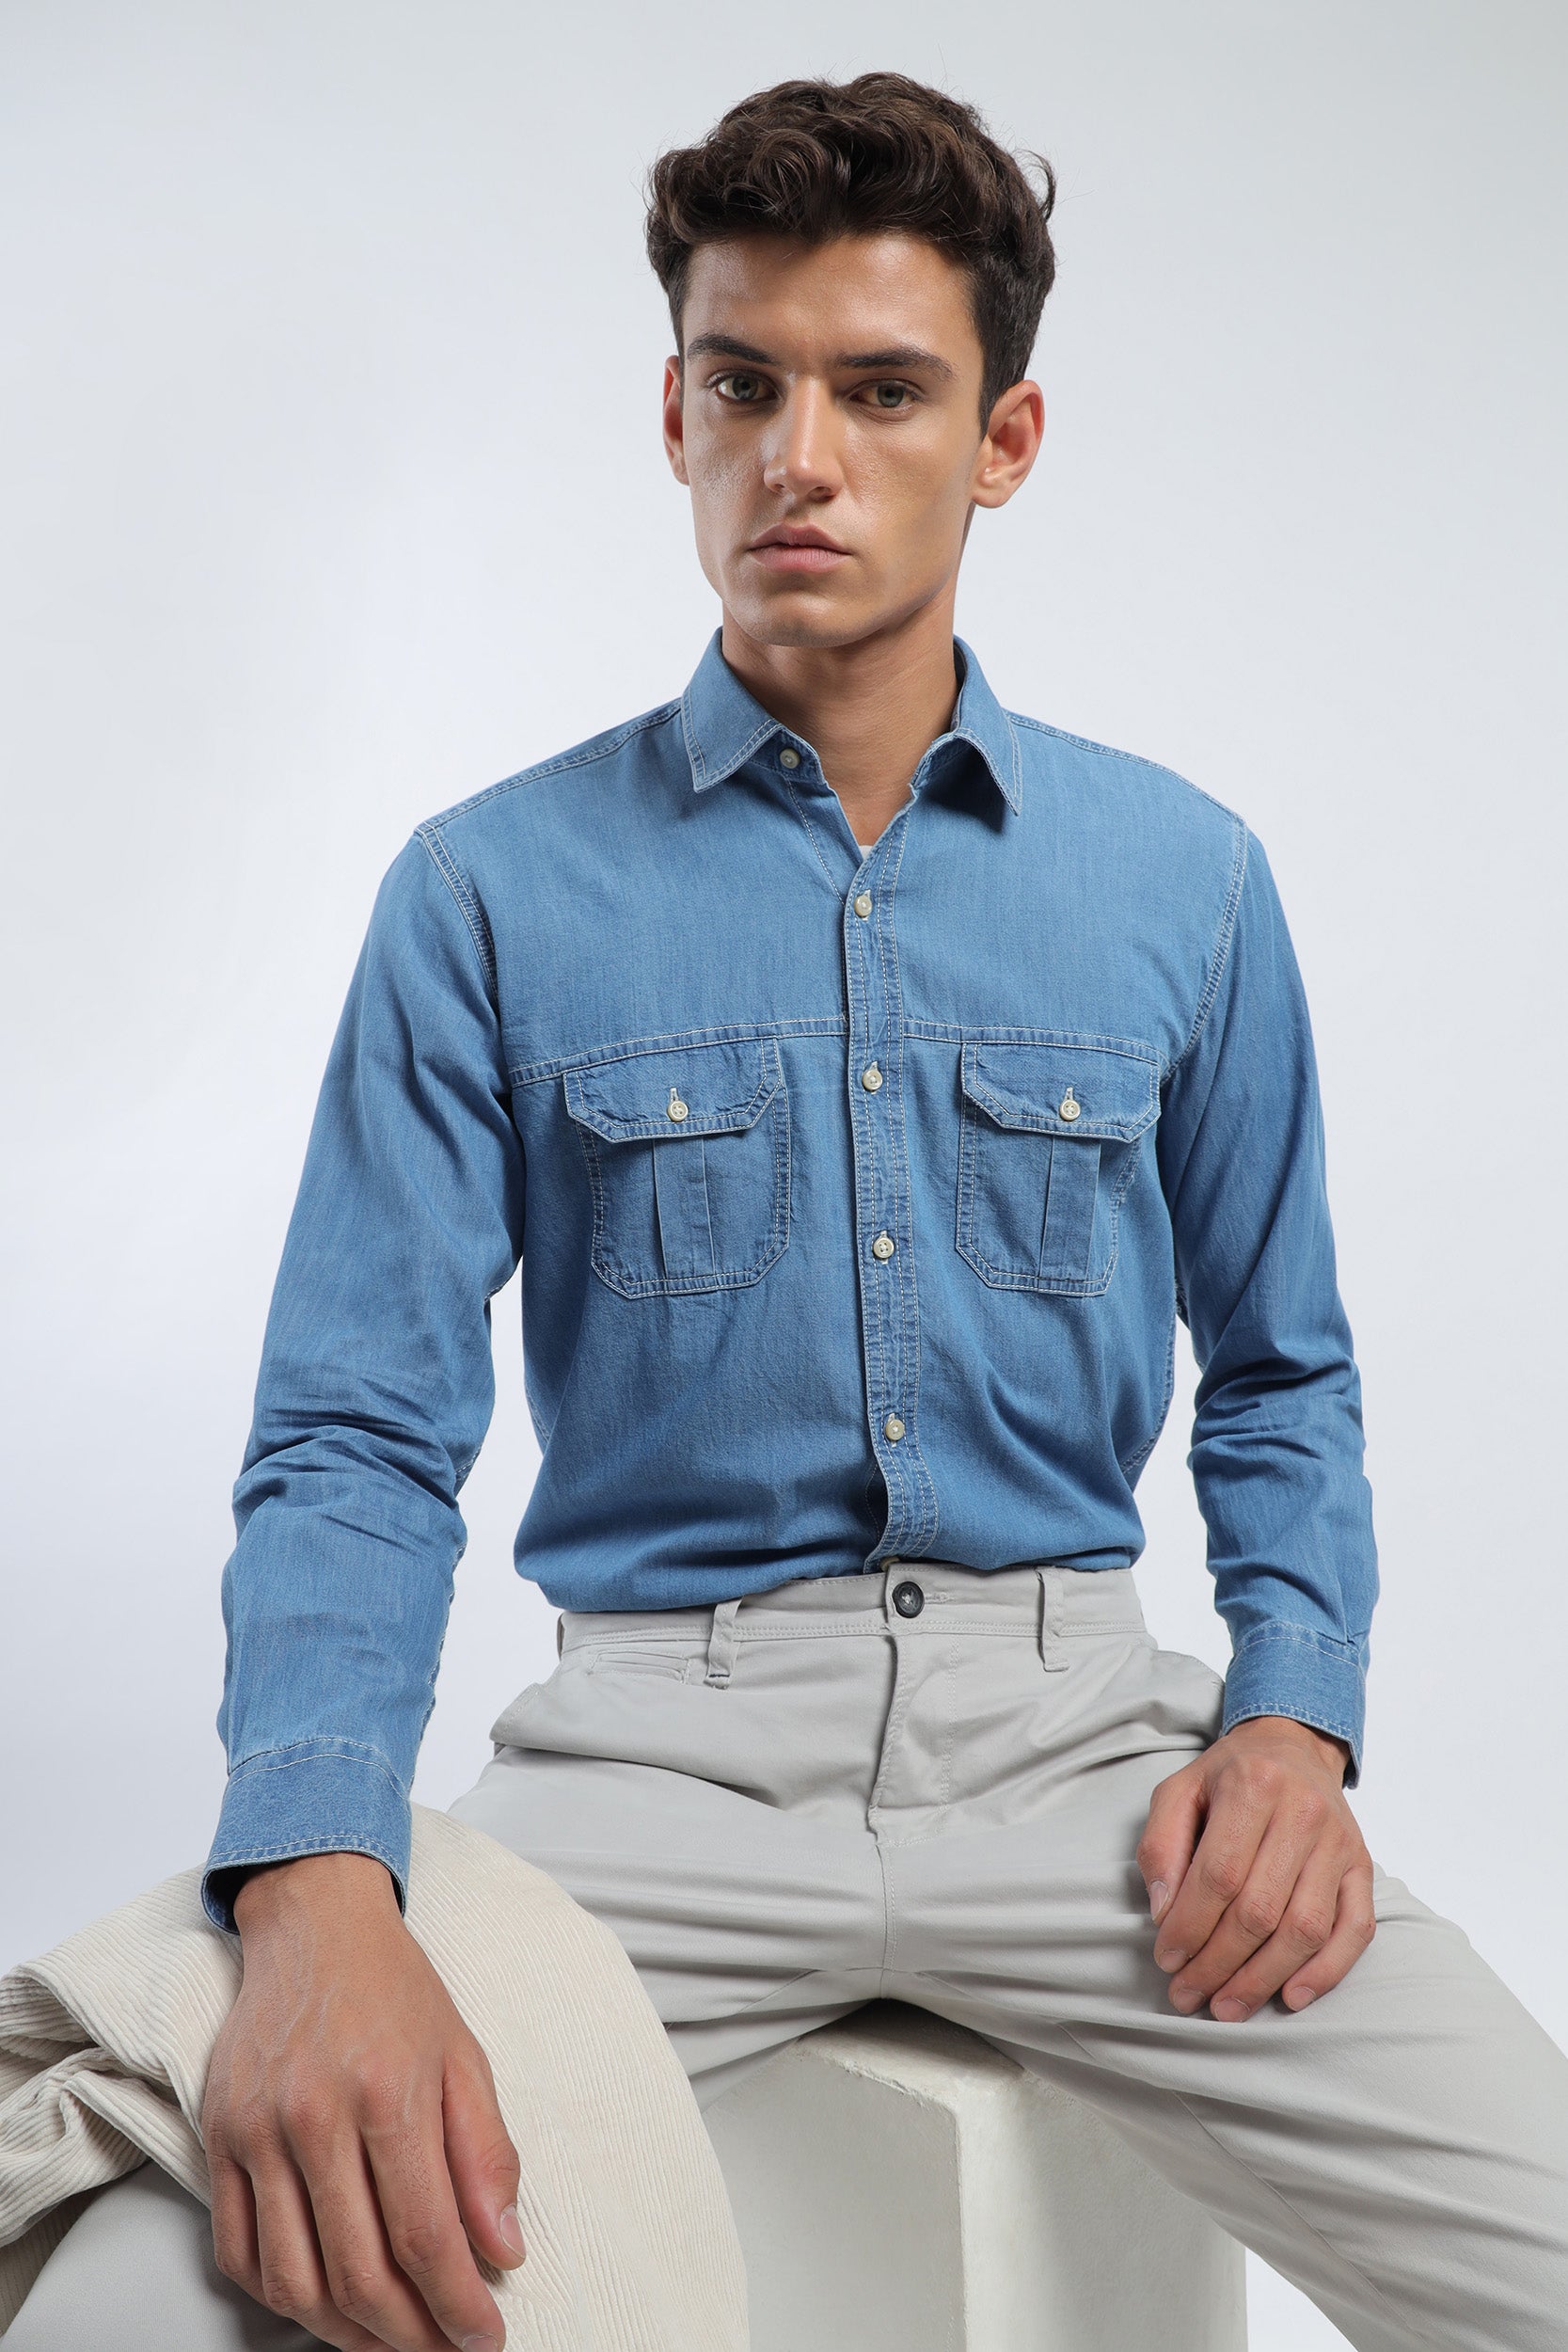 30 Best Blue Jeans Matching Shirts  Blue Jeans Combination Shirt Ideas   TiptopGents